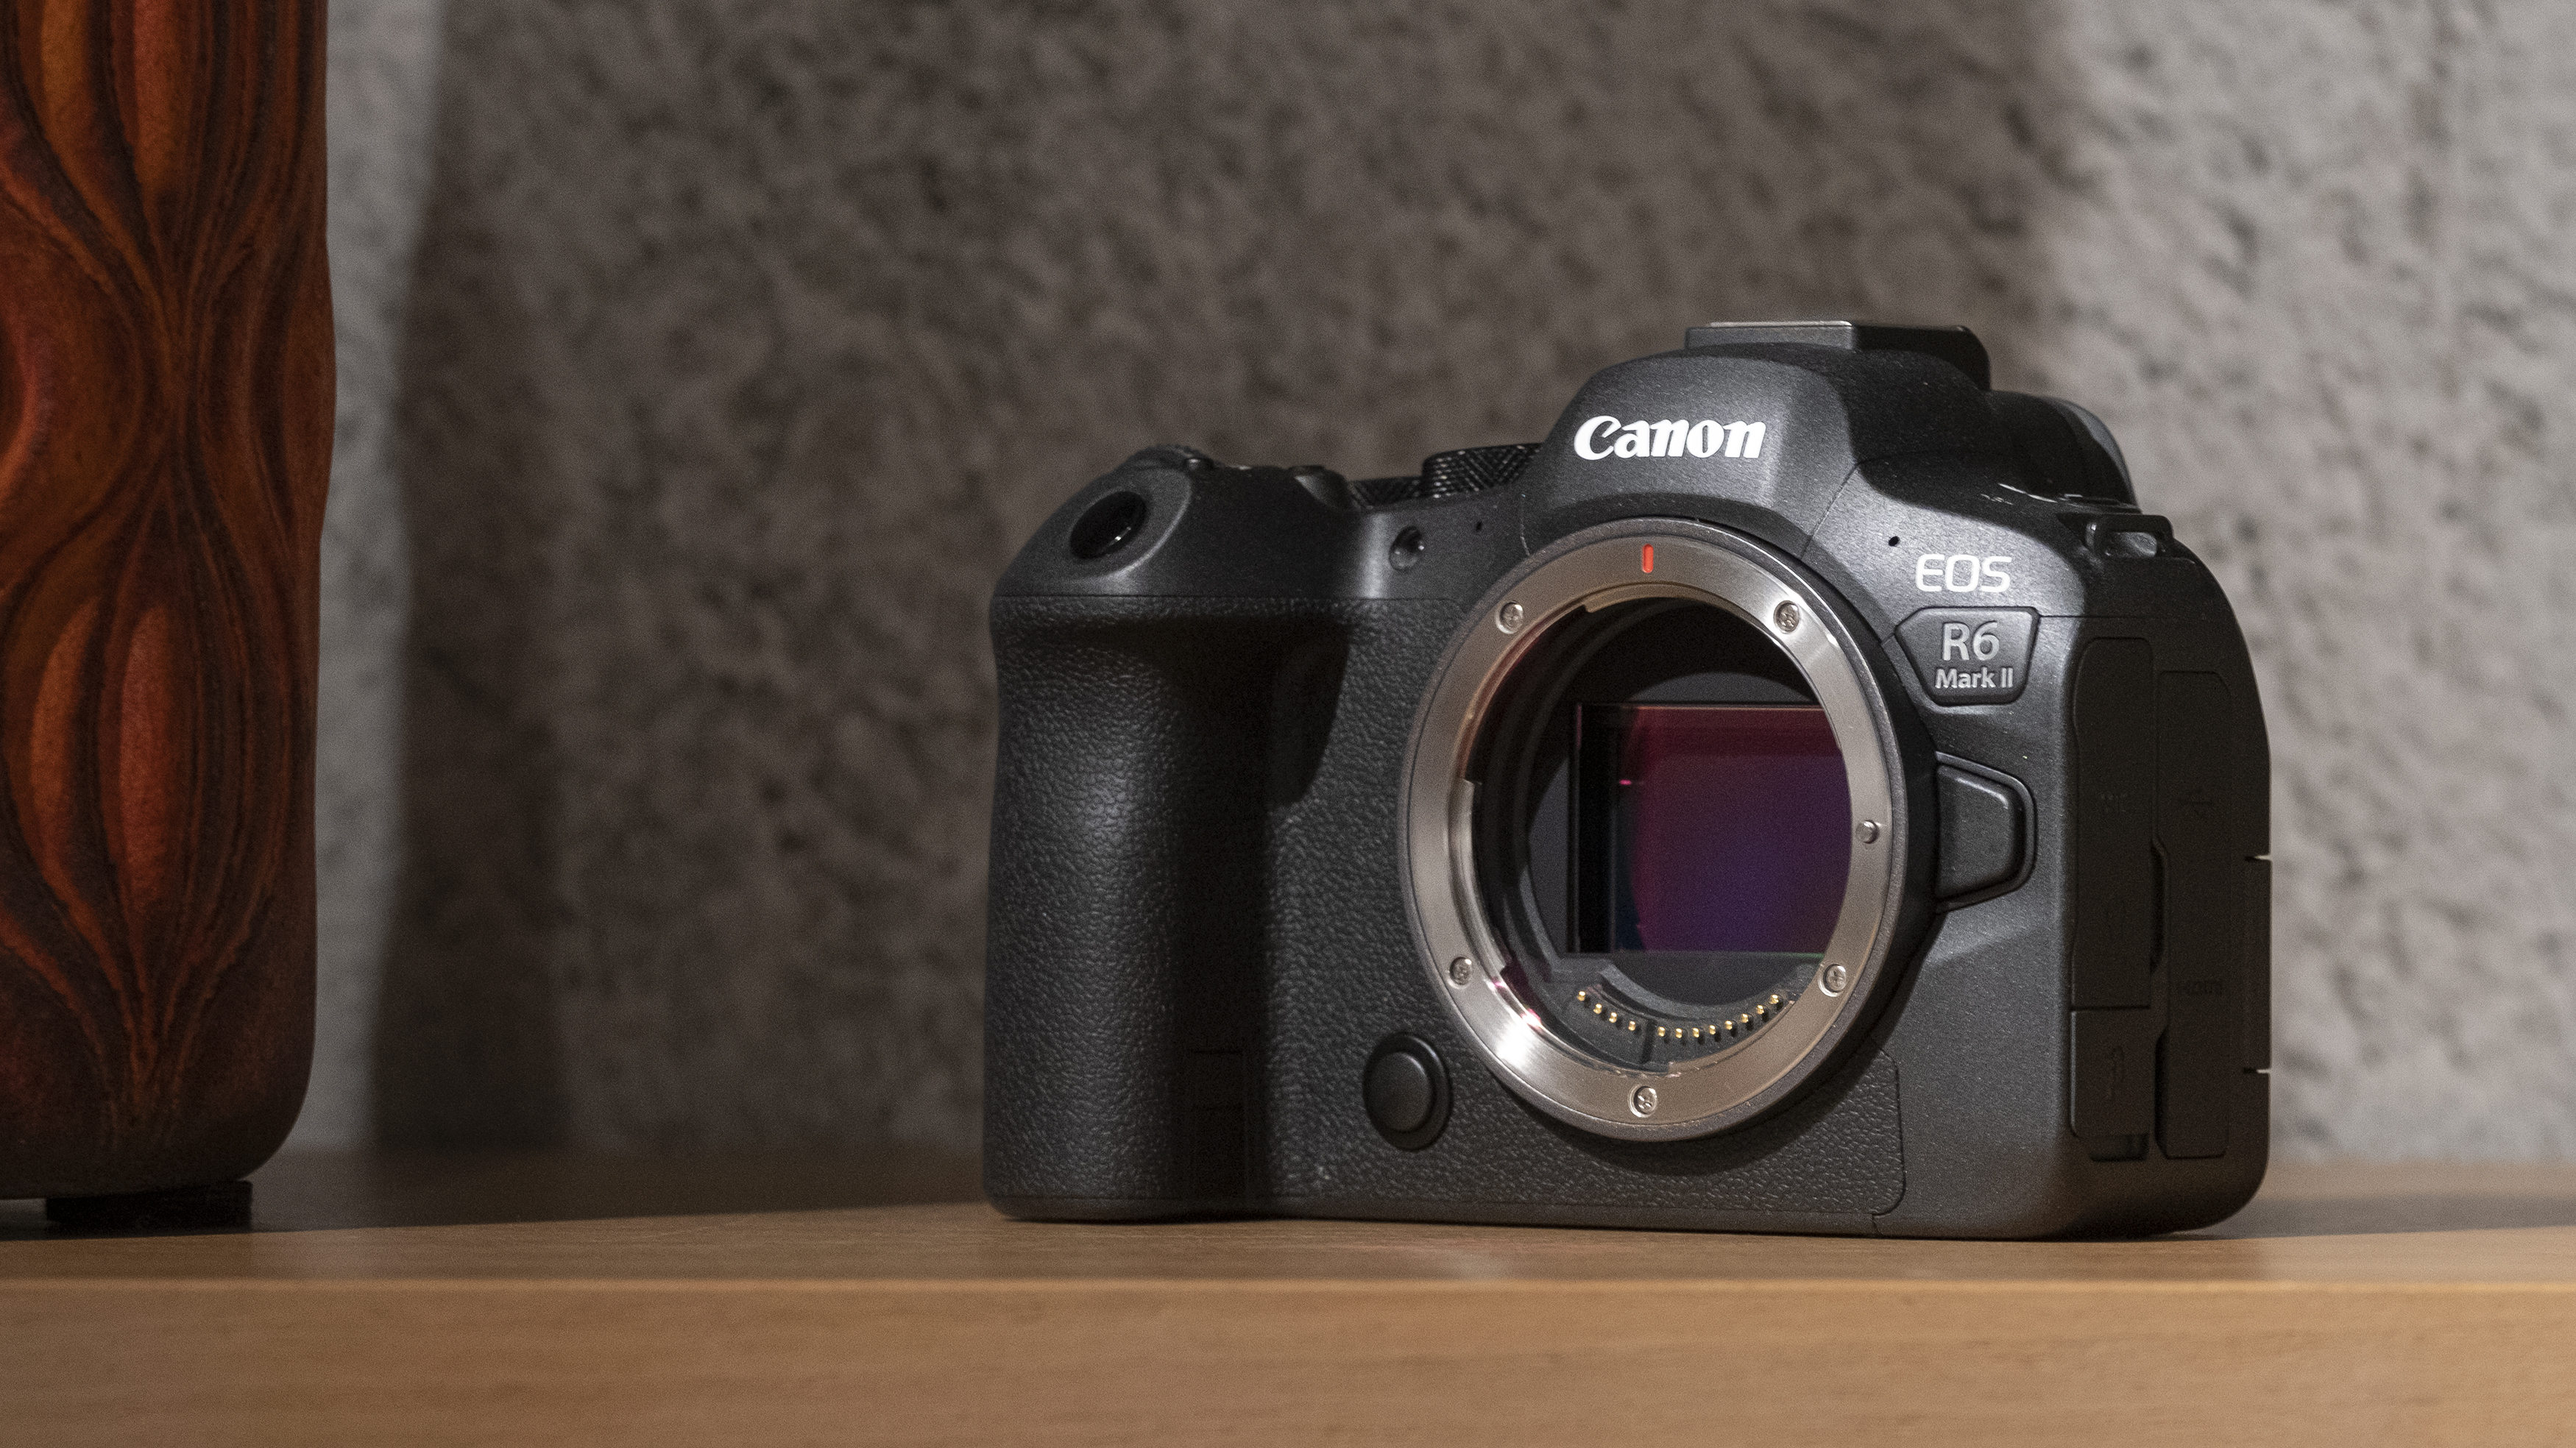 The Canon EOS R6 Mark II camera on a wooden shelf